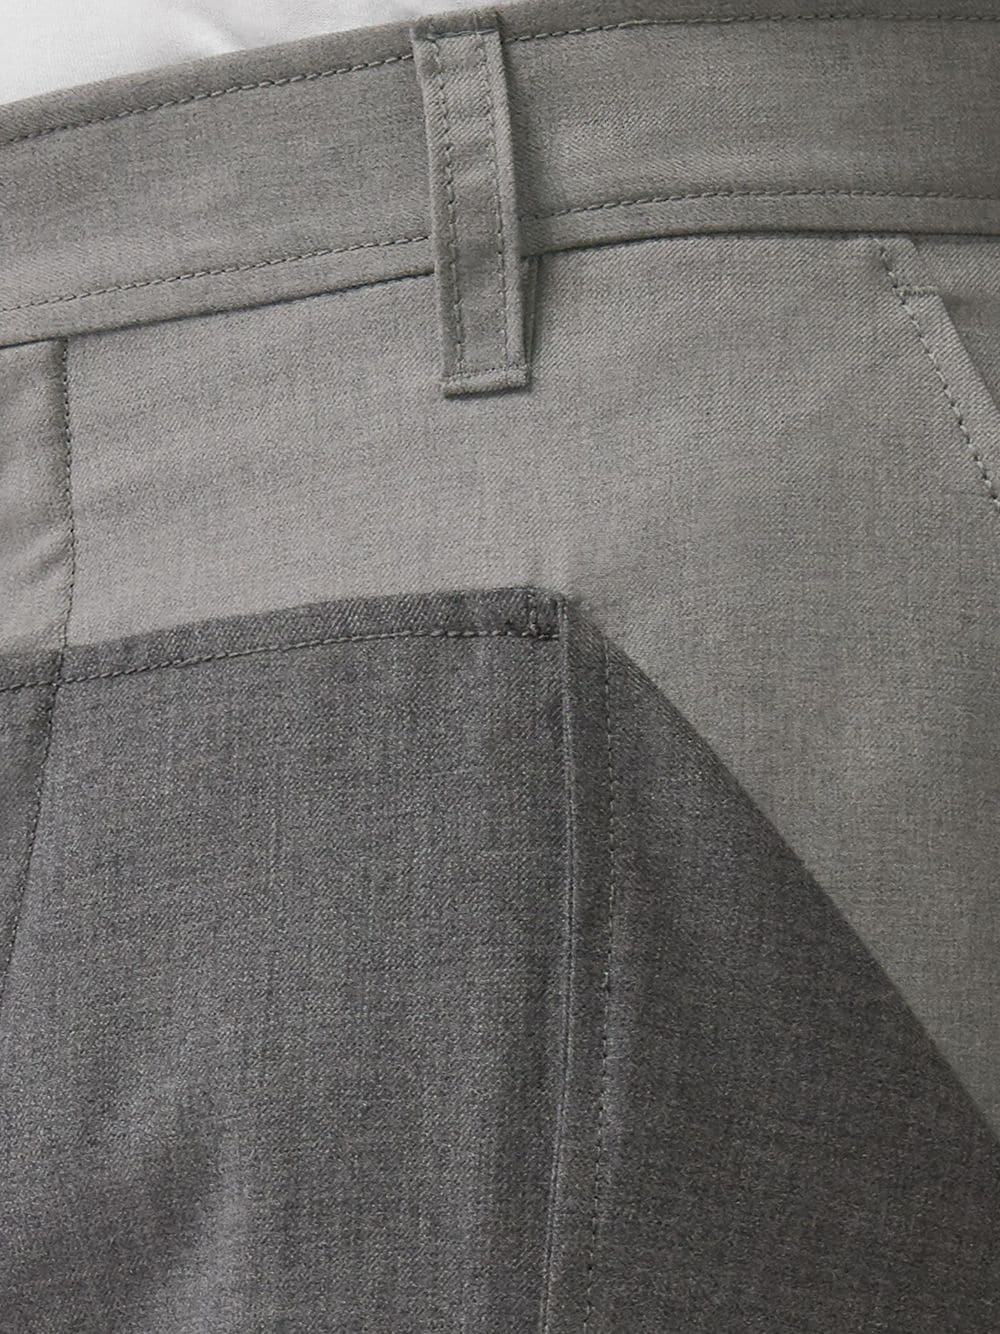 Burberry Press Stud Detail Trousers - Farfetch